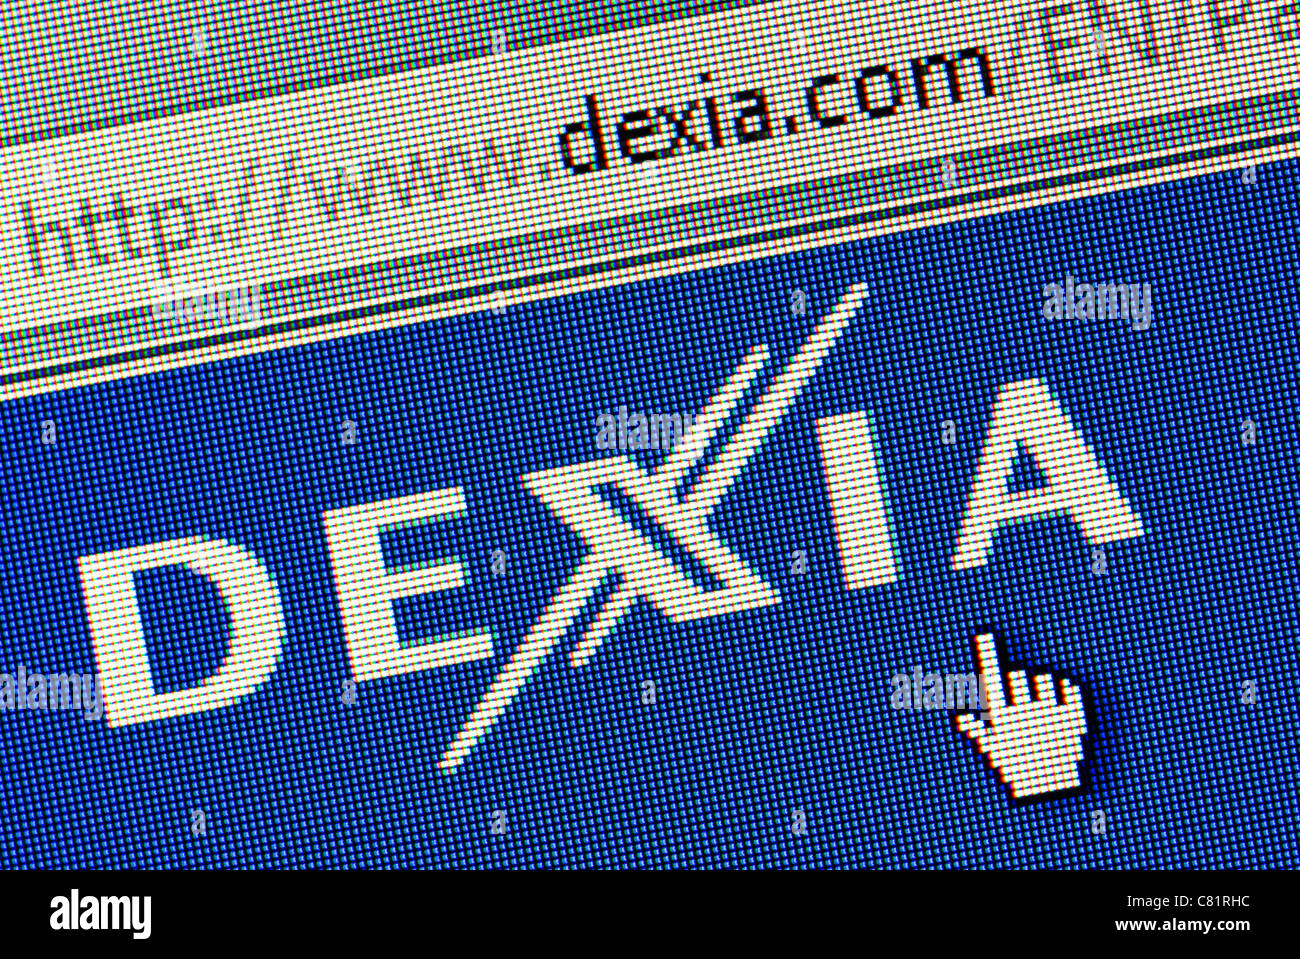 Dexia bank logo and website close up Stock Photo